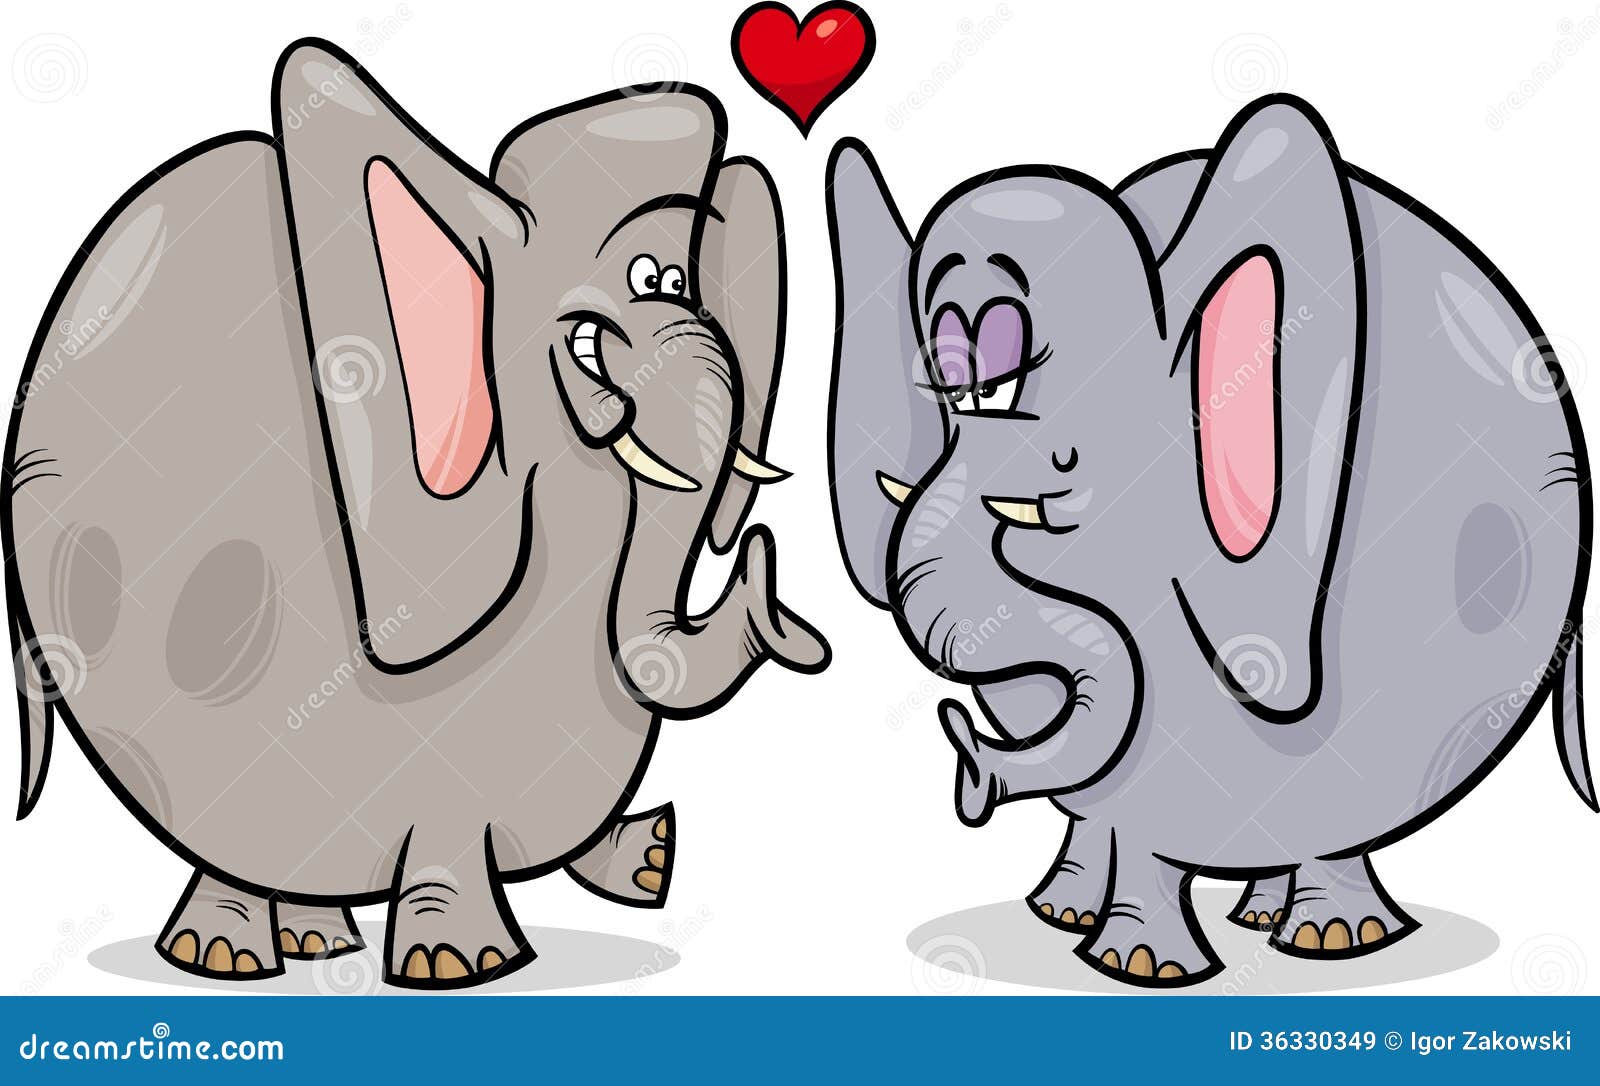 elephant love clipart - photo #14